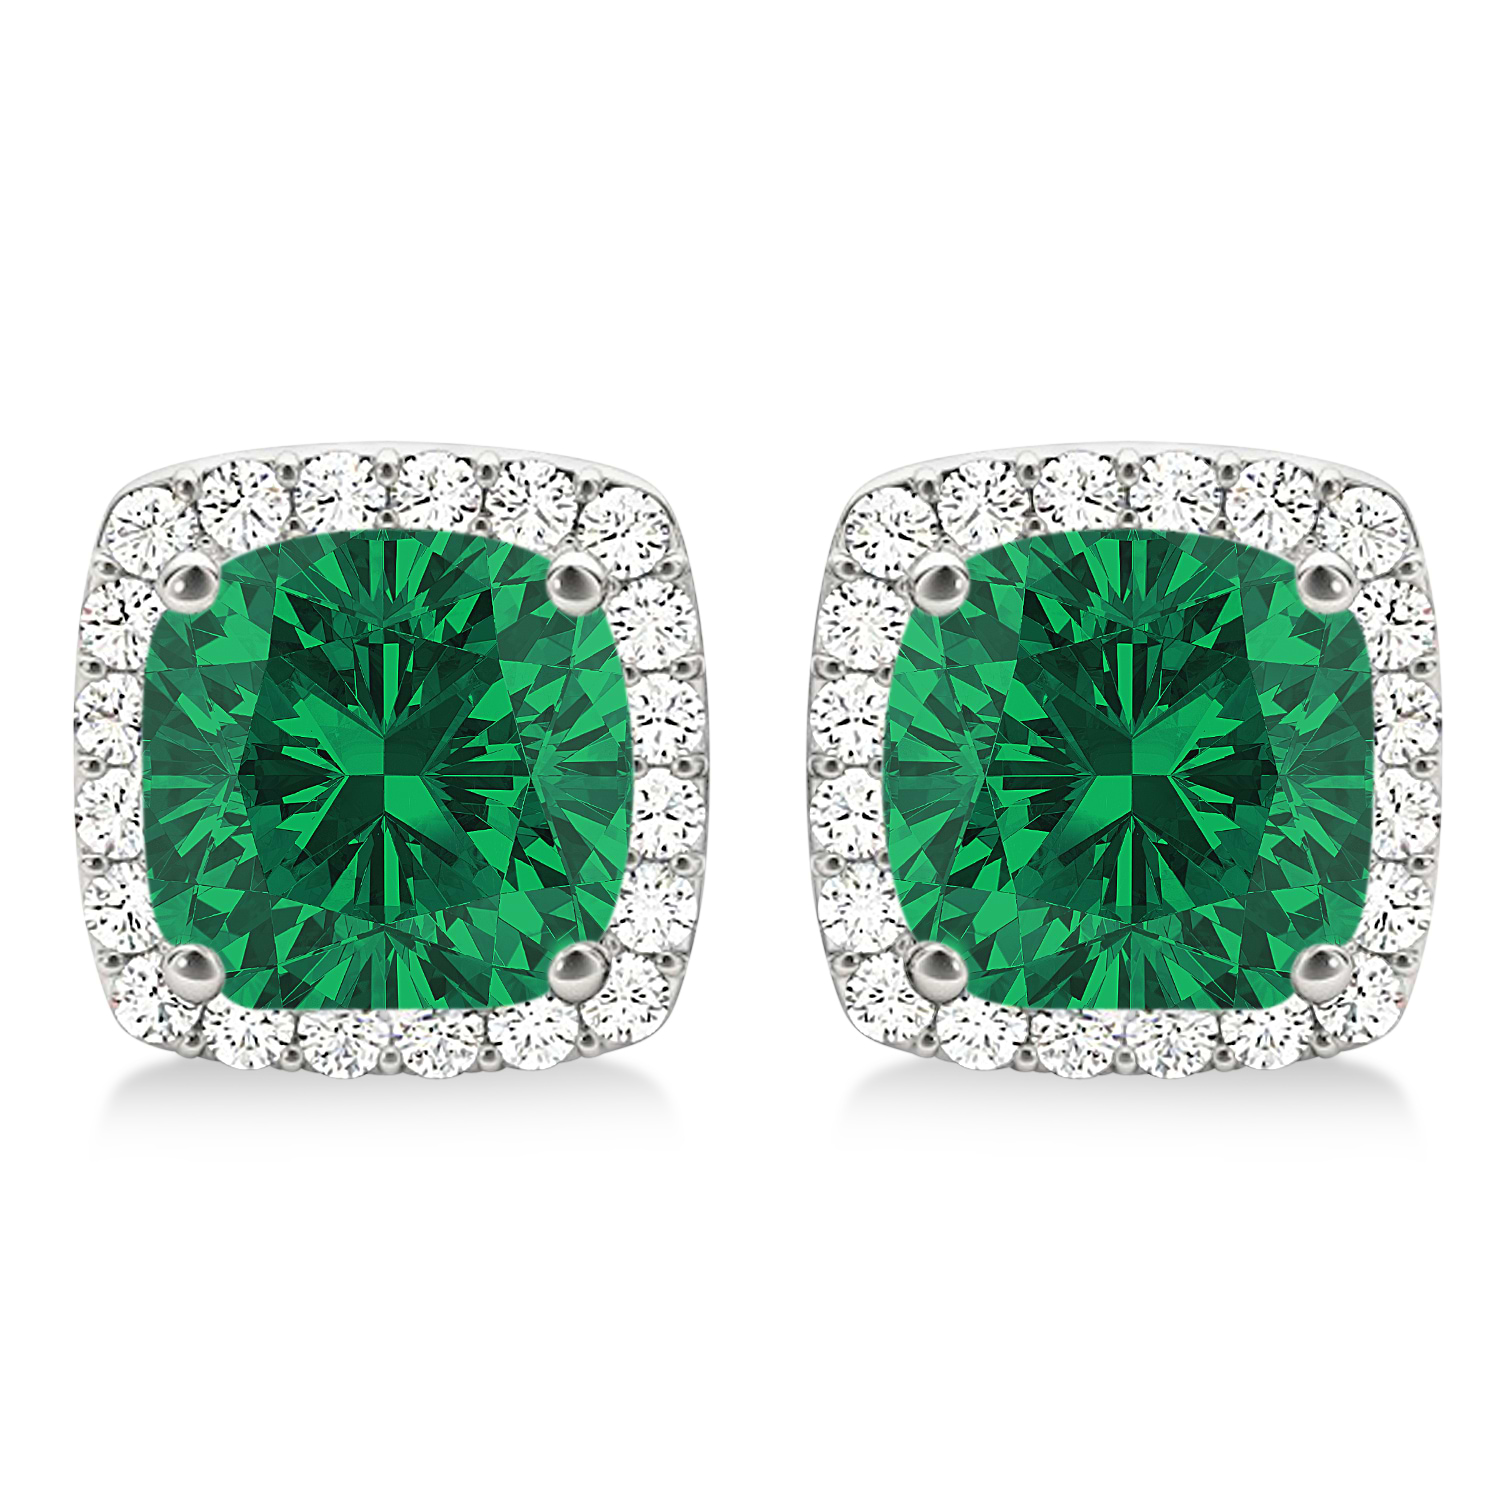 Cushion Cut Lab Emerald & Diamond Halo Earrings 14k White Gold (1.50ct)